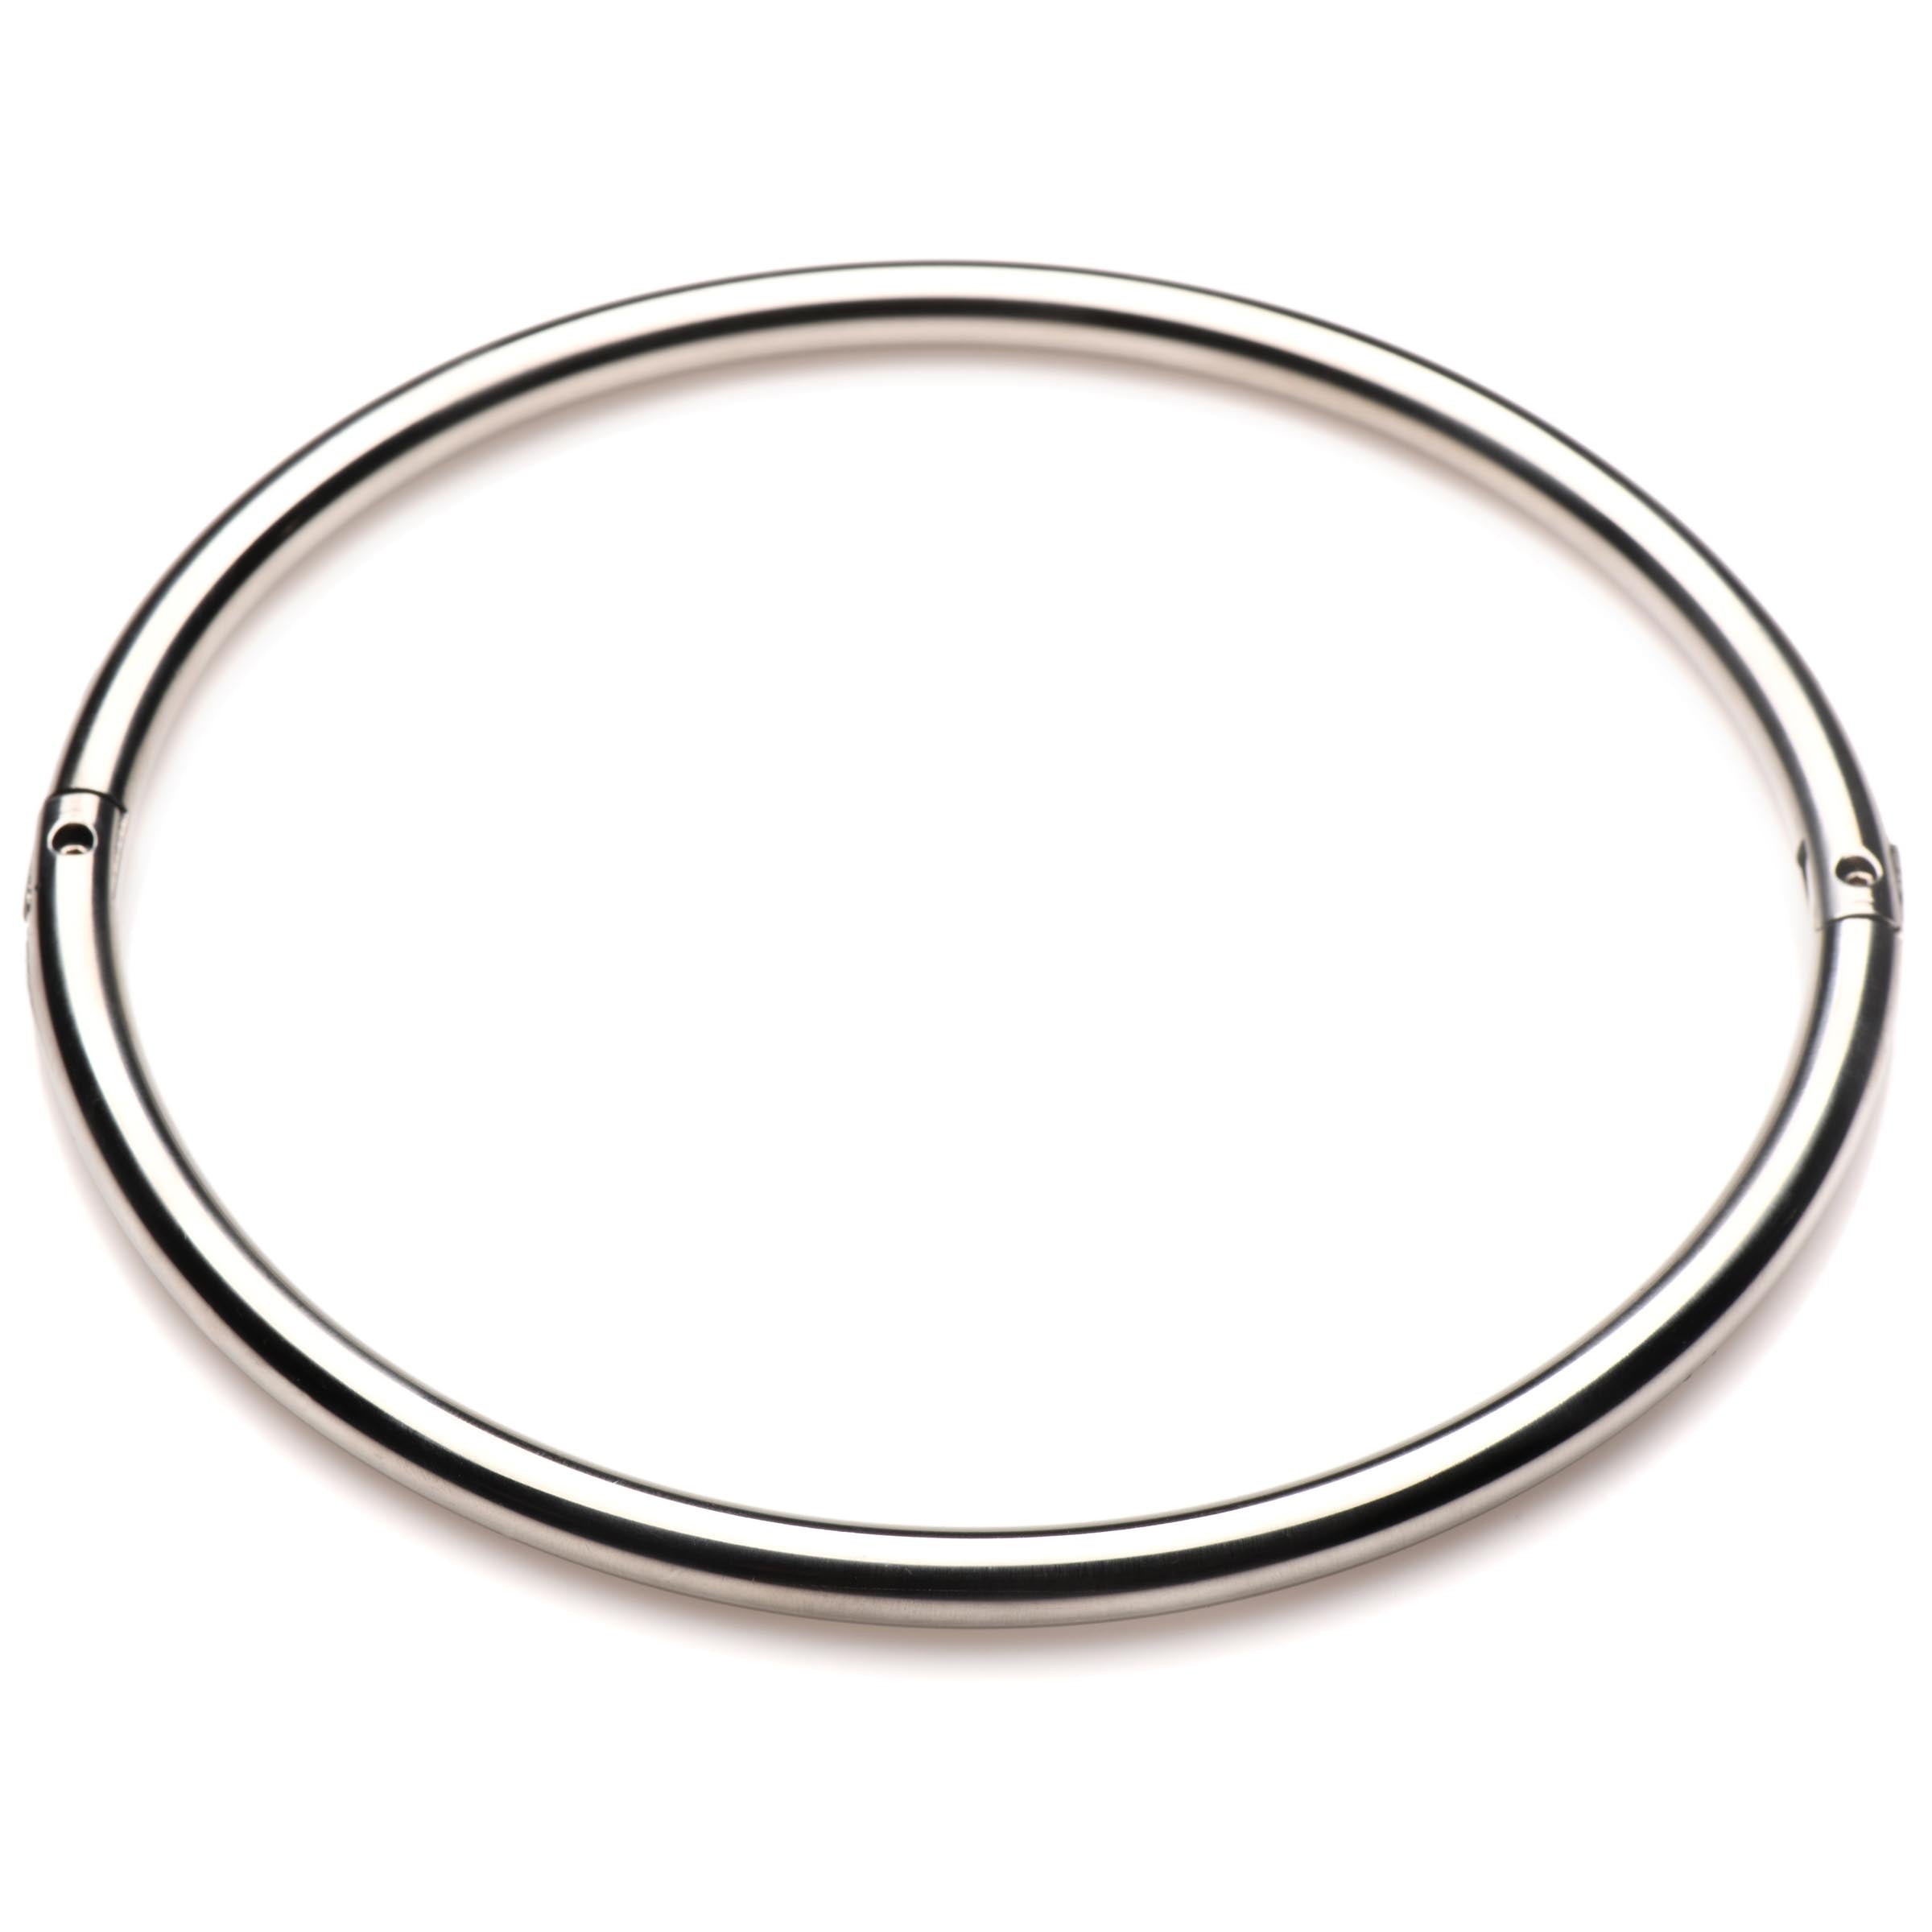 Stainless Steel Locking Collar - Small